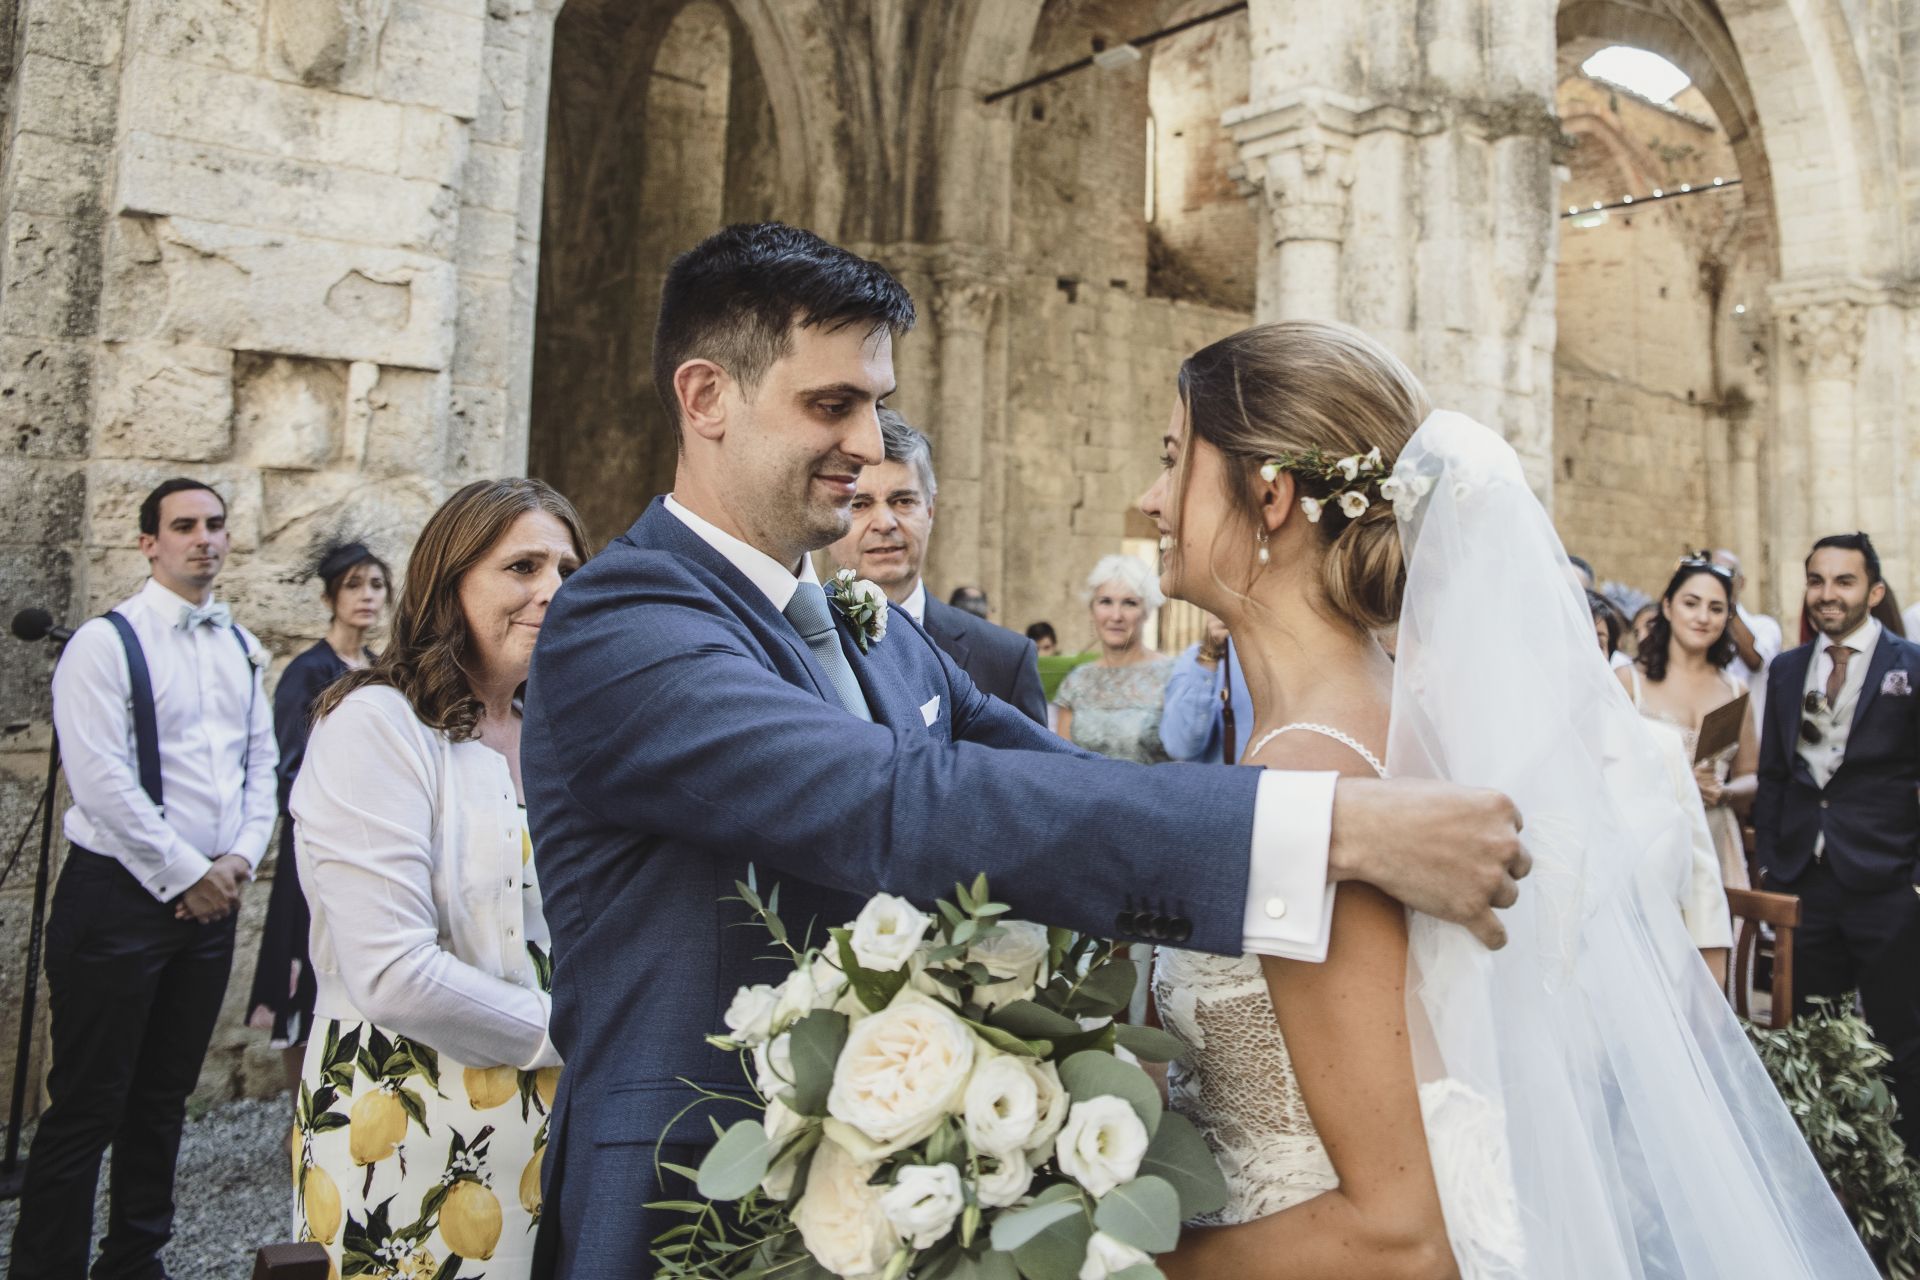 WEDDING DIARY | WE GOT MARRIED “UNDER THE TUSCAN SUN” – Chiara Lewis